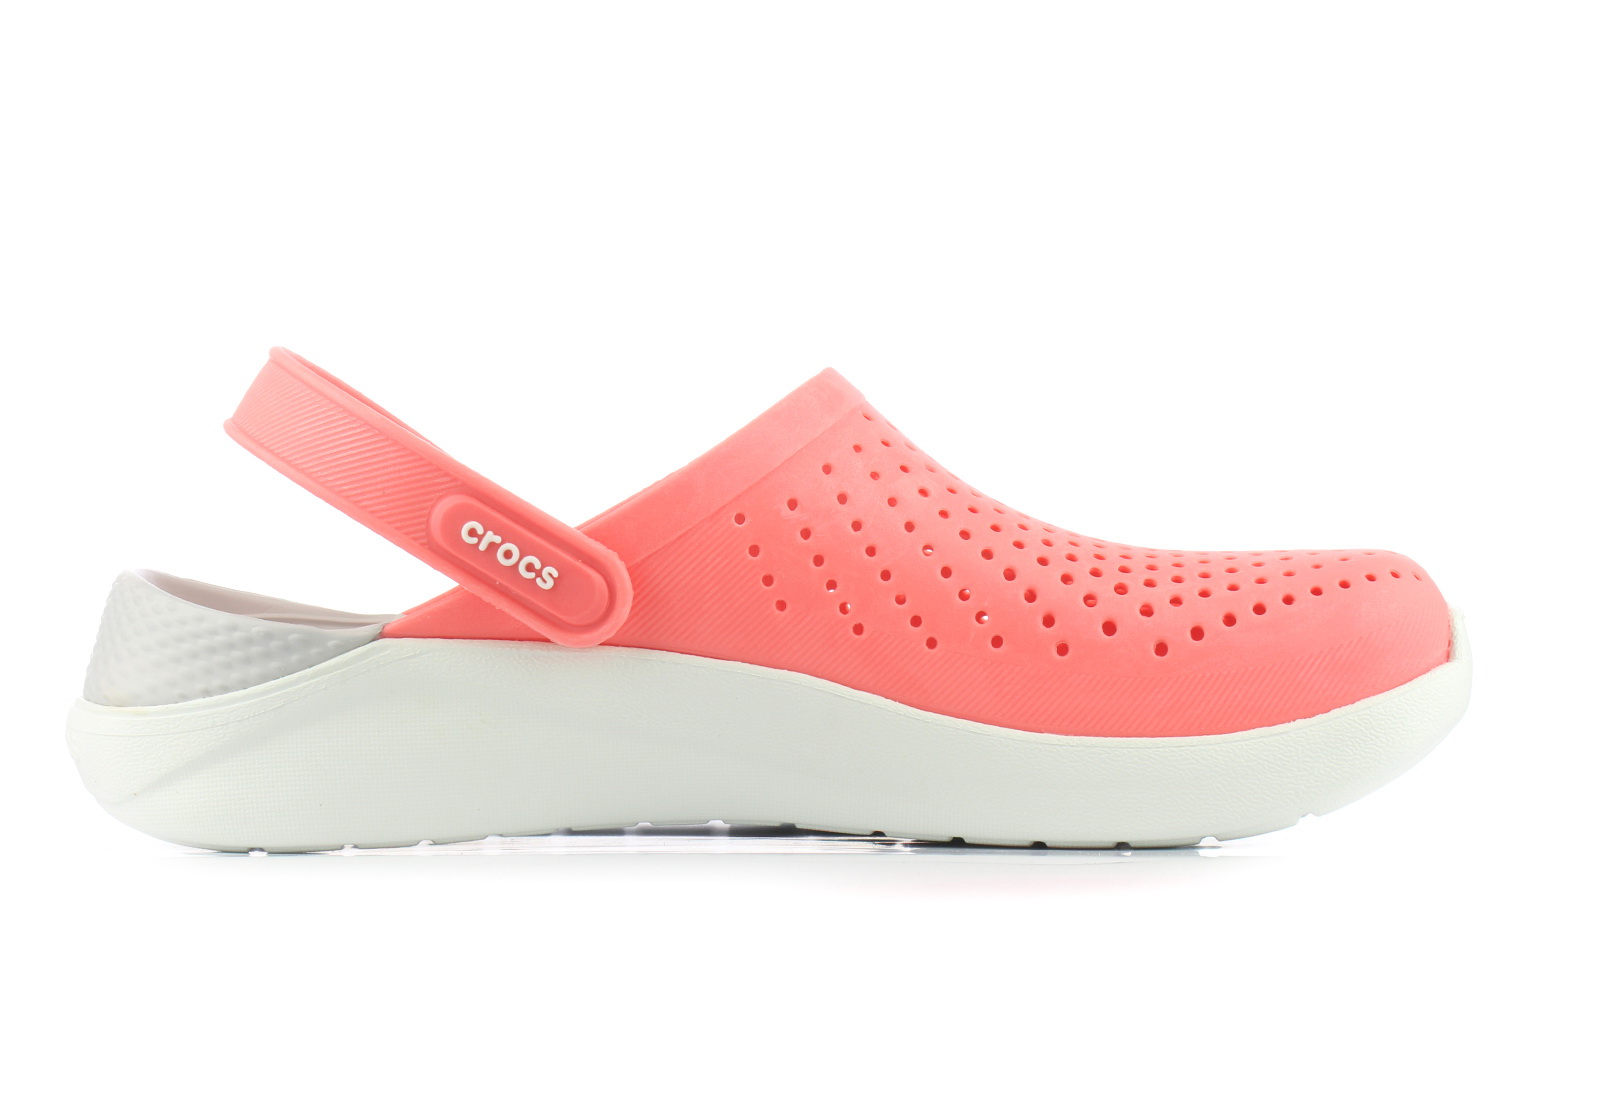 Crocs Clogs - Literide Clog - 204592-6SL - Online shop for sneakers ...